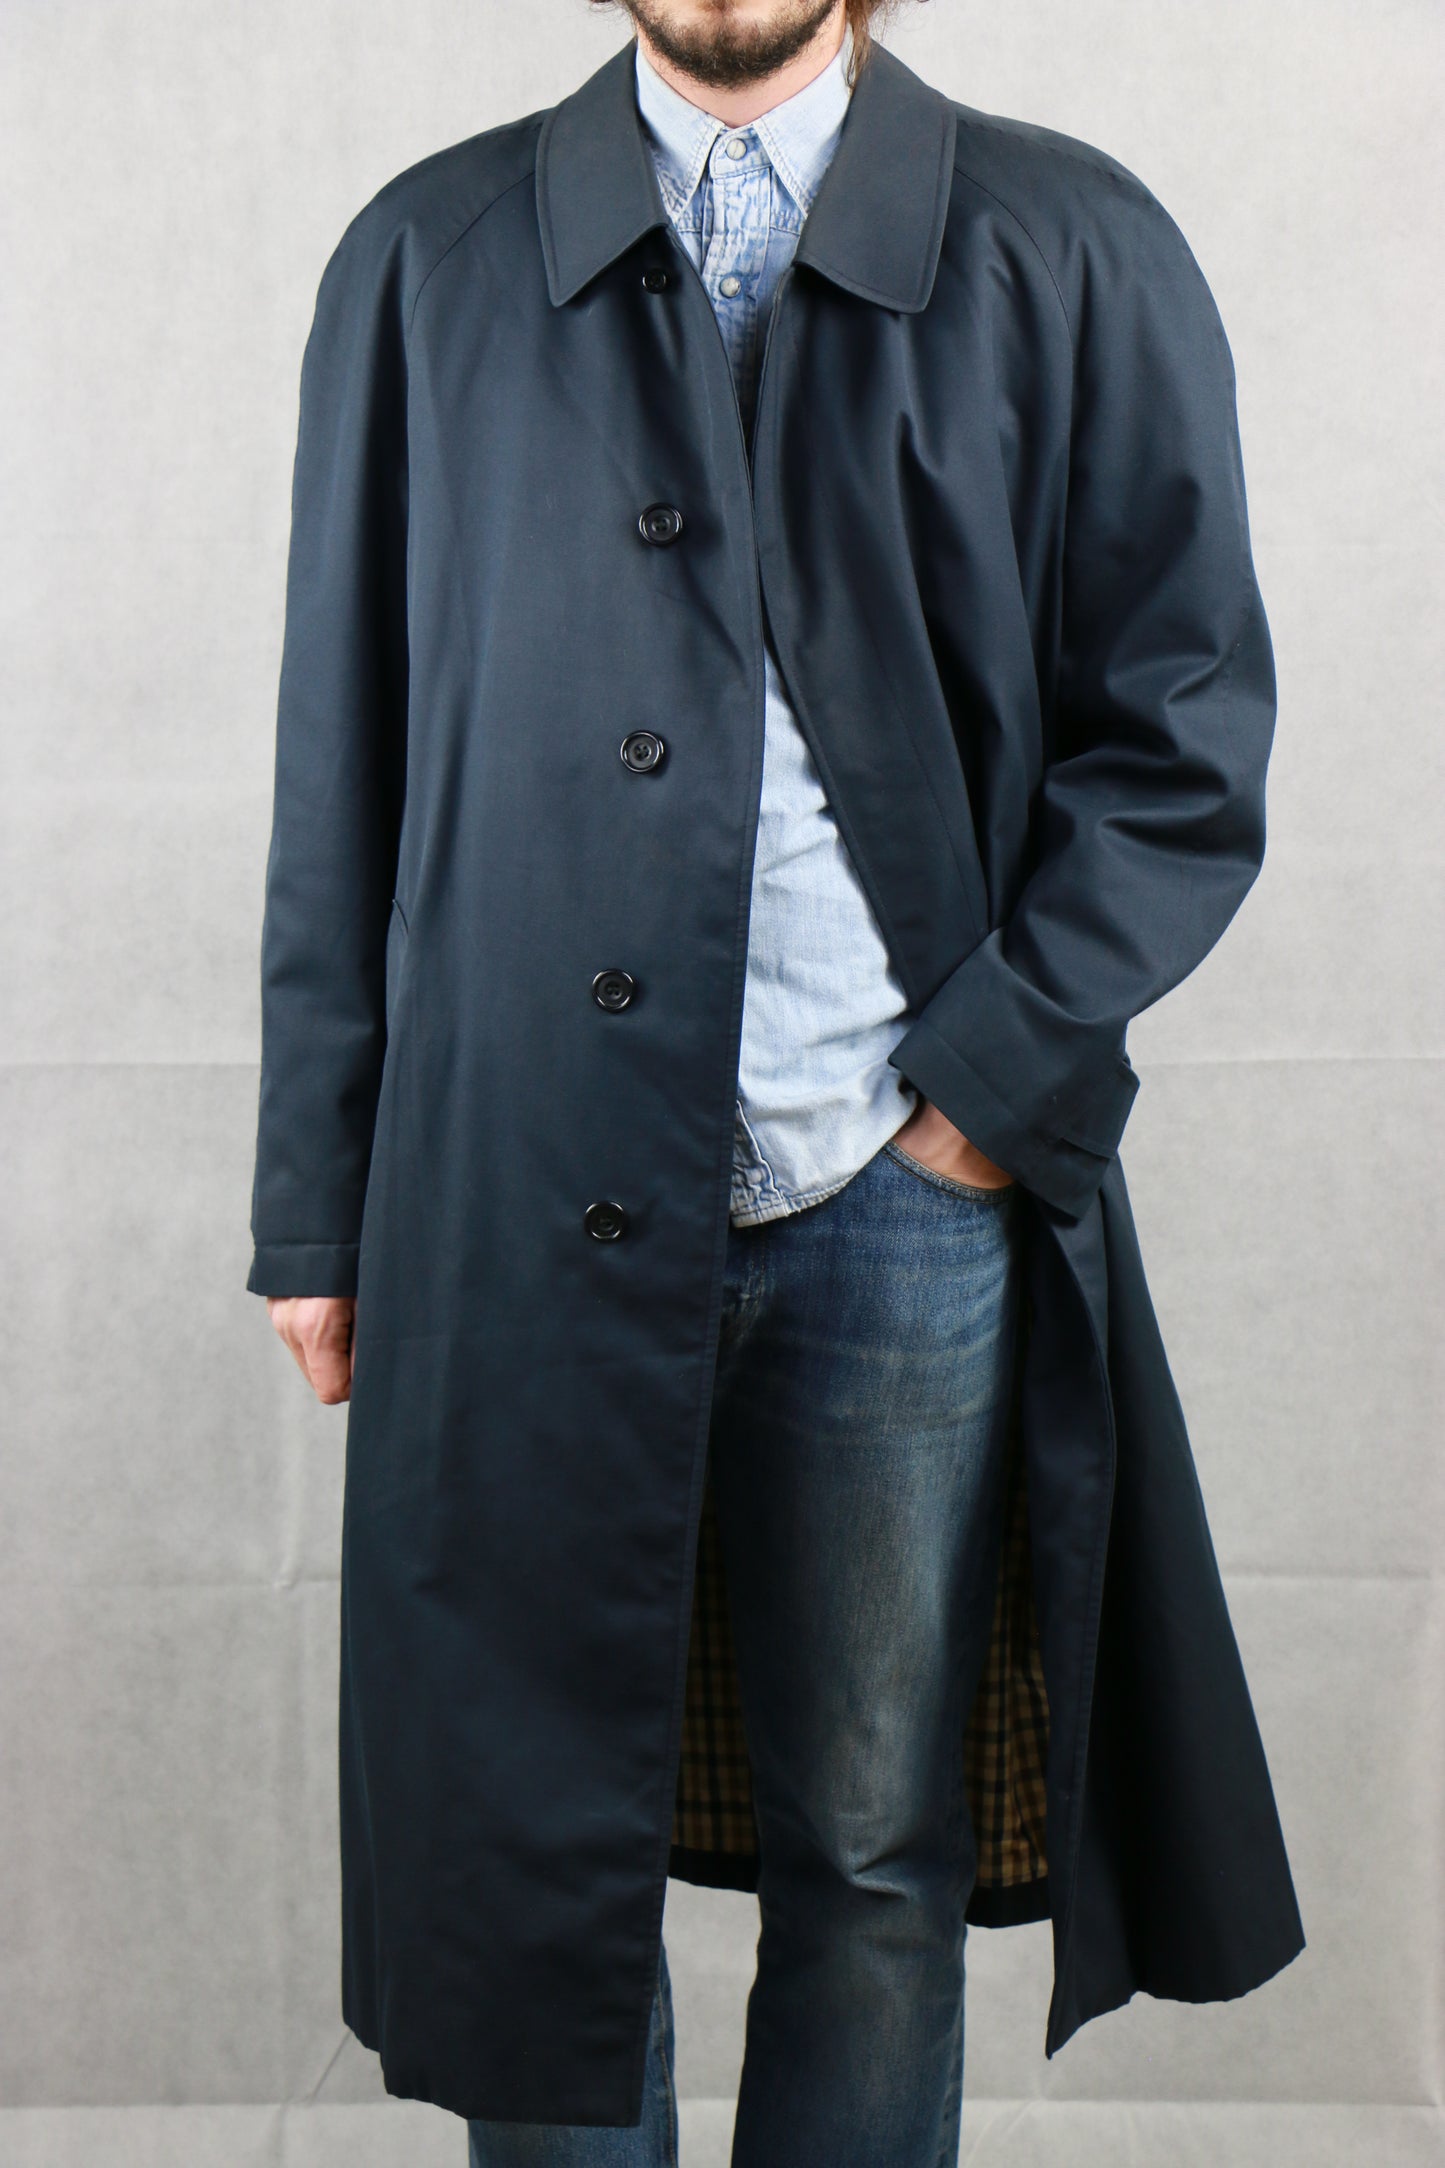 Aquascutum Raincoat - vintage clothing clochard92.com